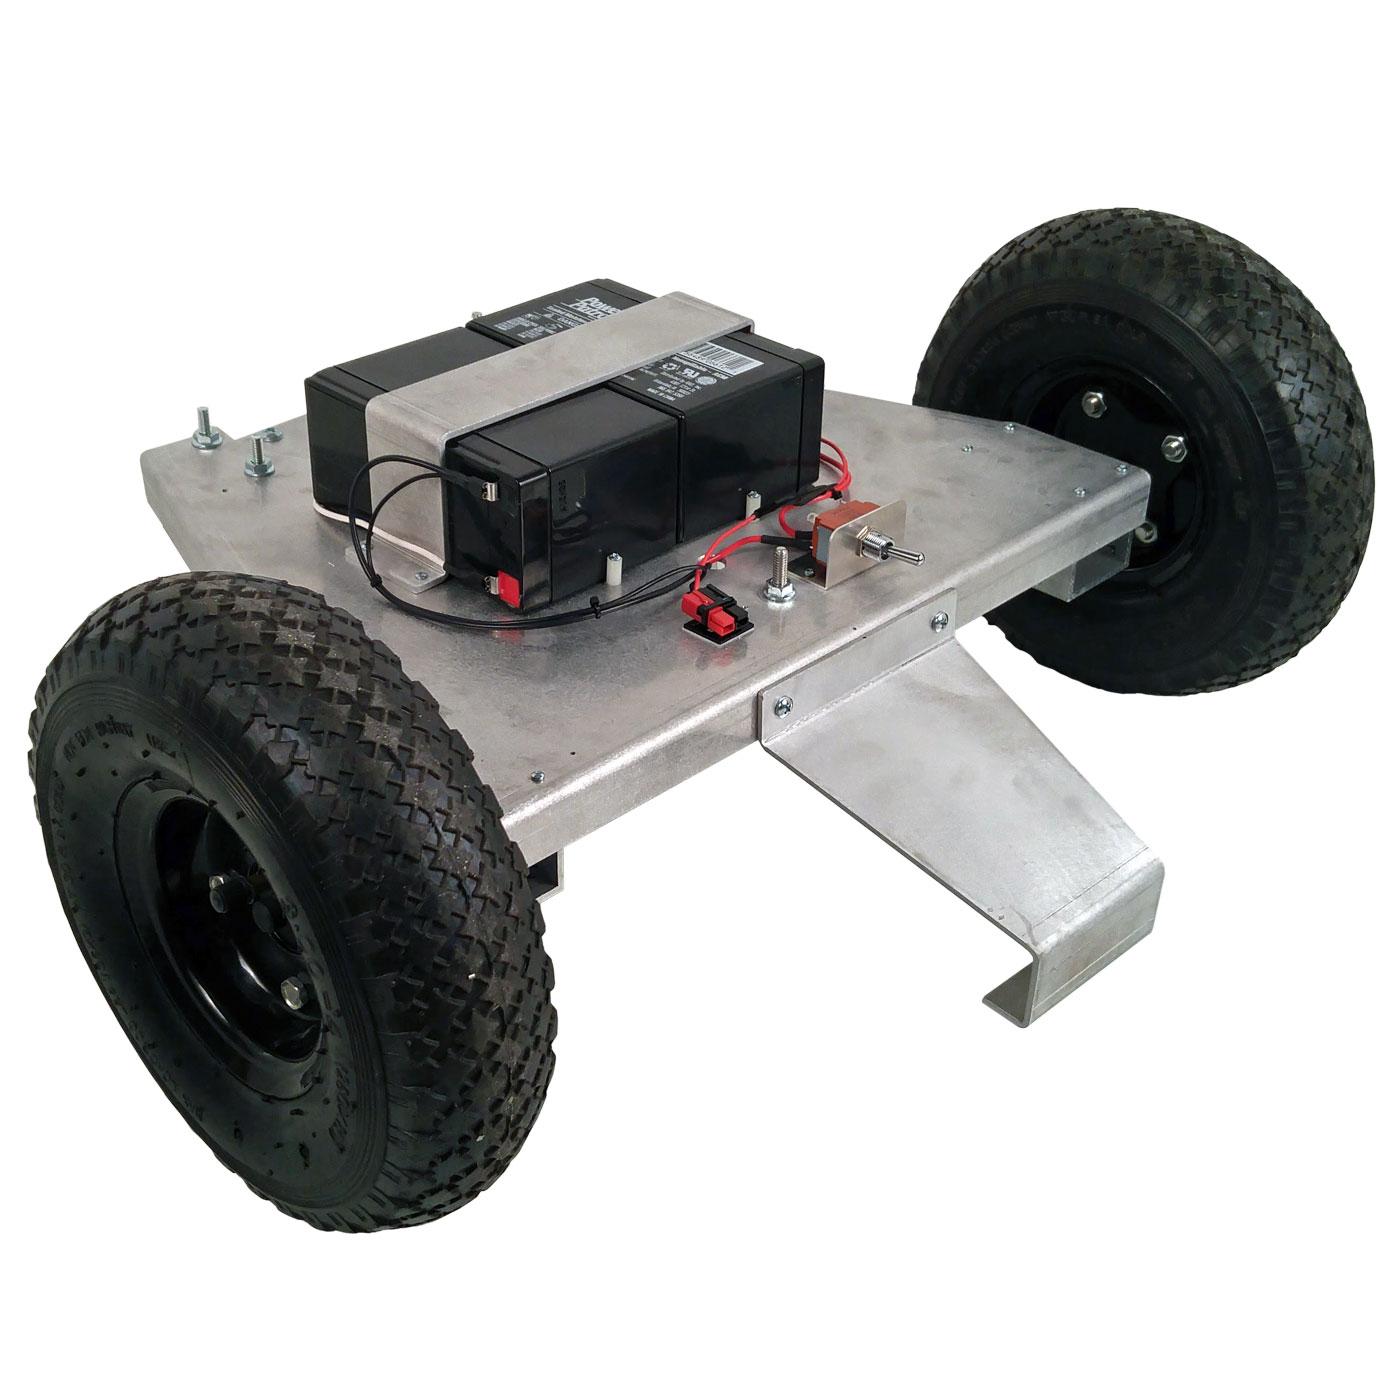 Configurable - IG42-SB2, 2WD Tube Mount Robot Platform